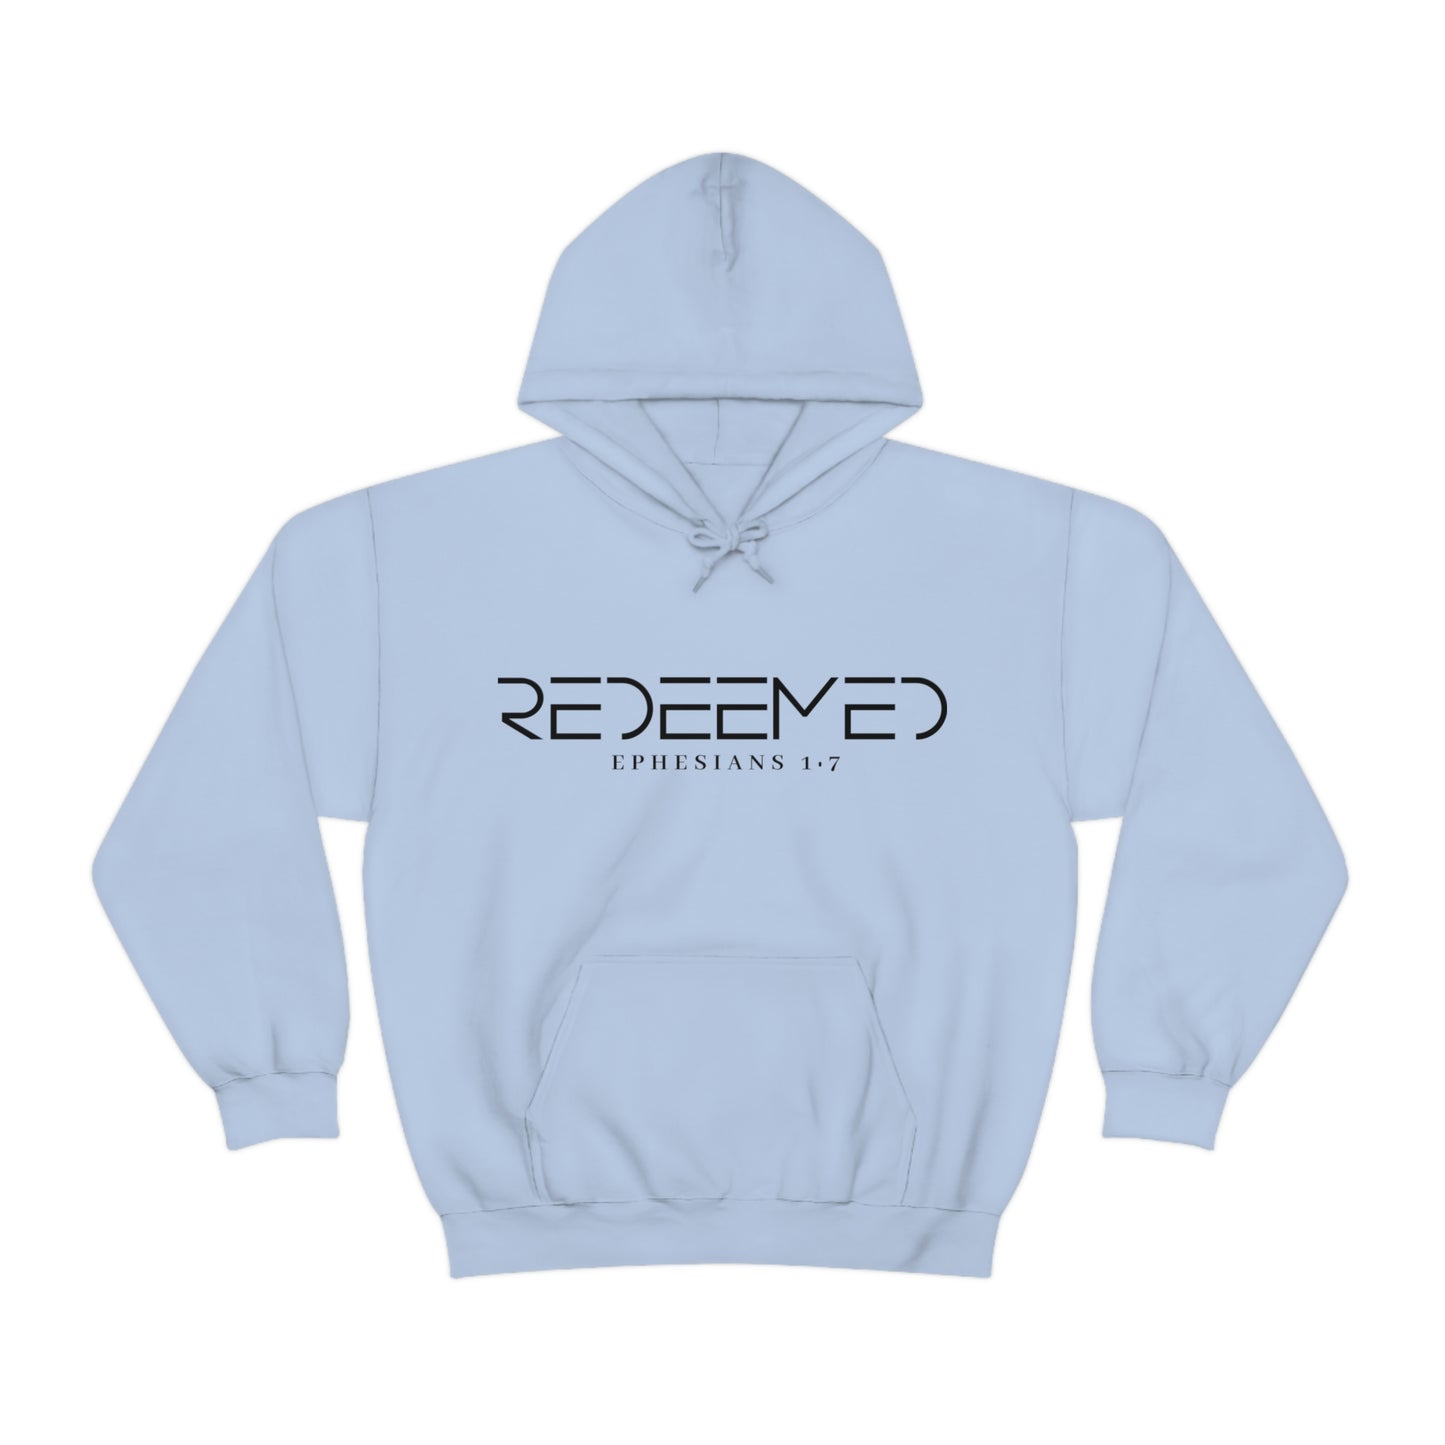 Redemeed - Unisex Heavy Blend Hooded Sweatshirt